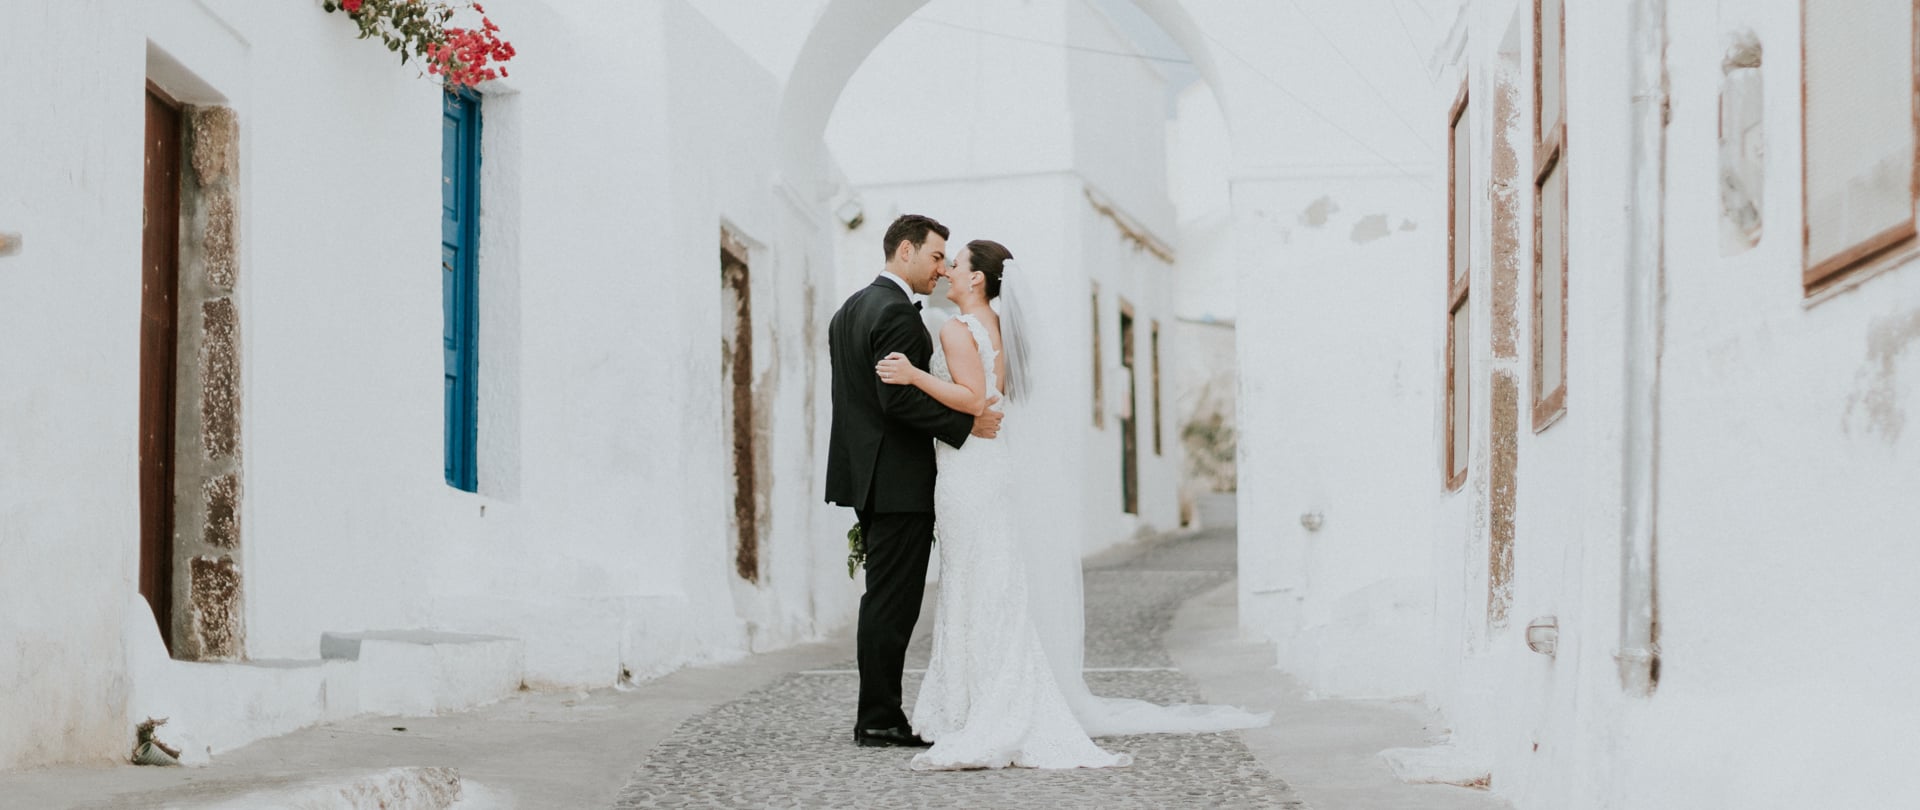 Jessica & David Wedding Video Filmed at Santorini, Greece